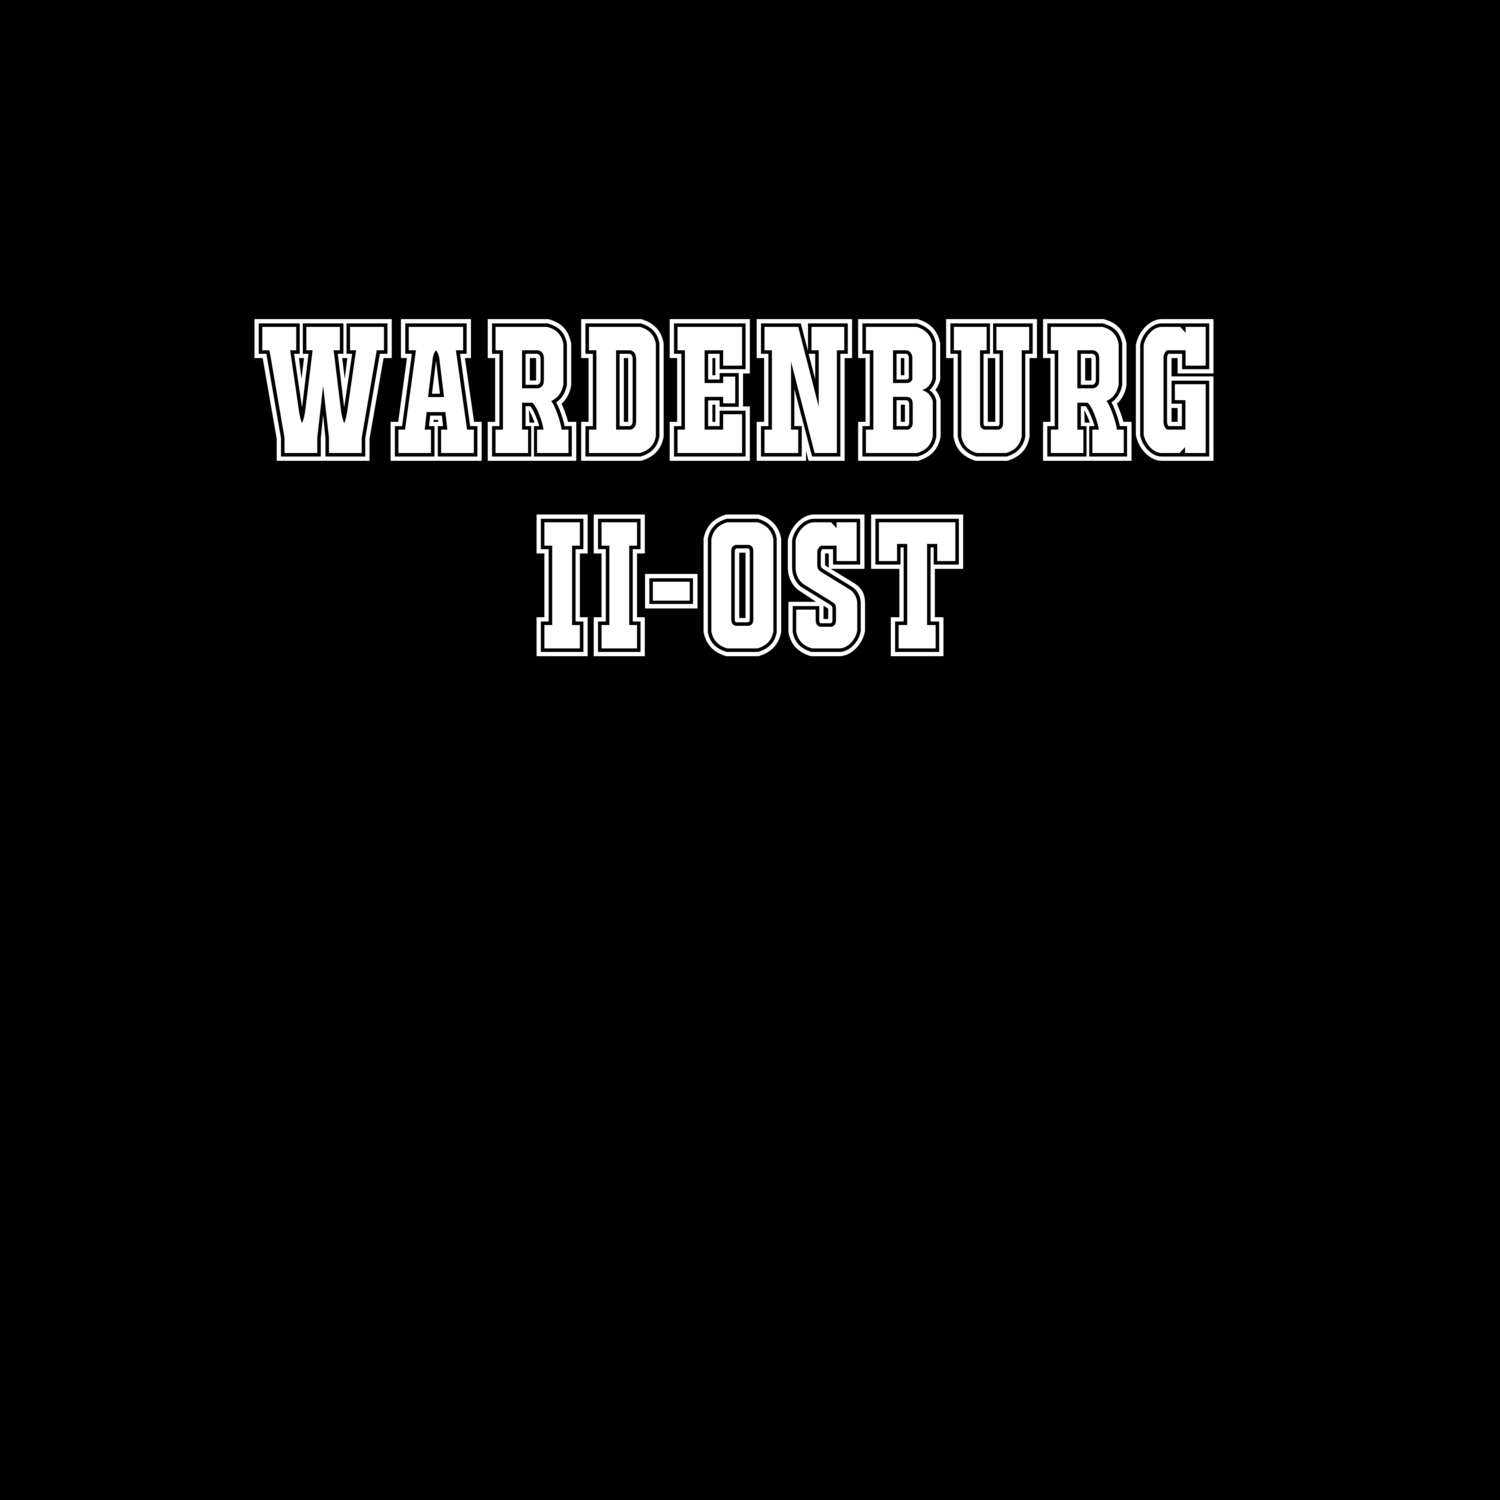 Wardenburg II-Ost T-Shirt »Classic«